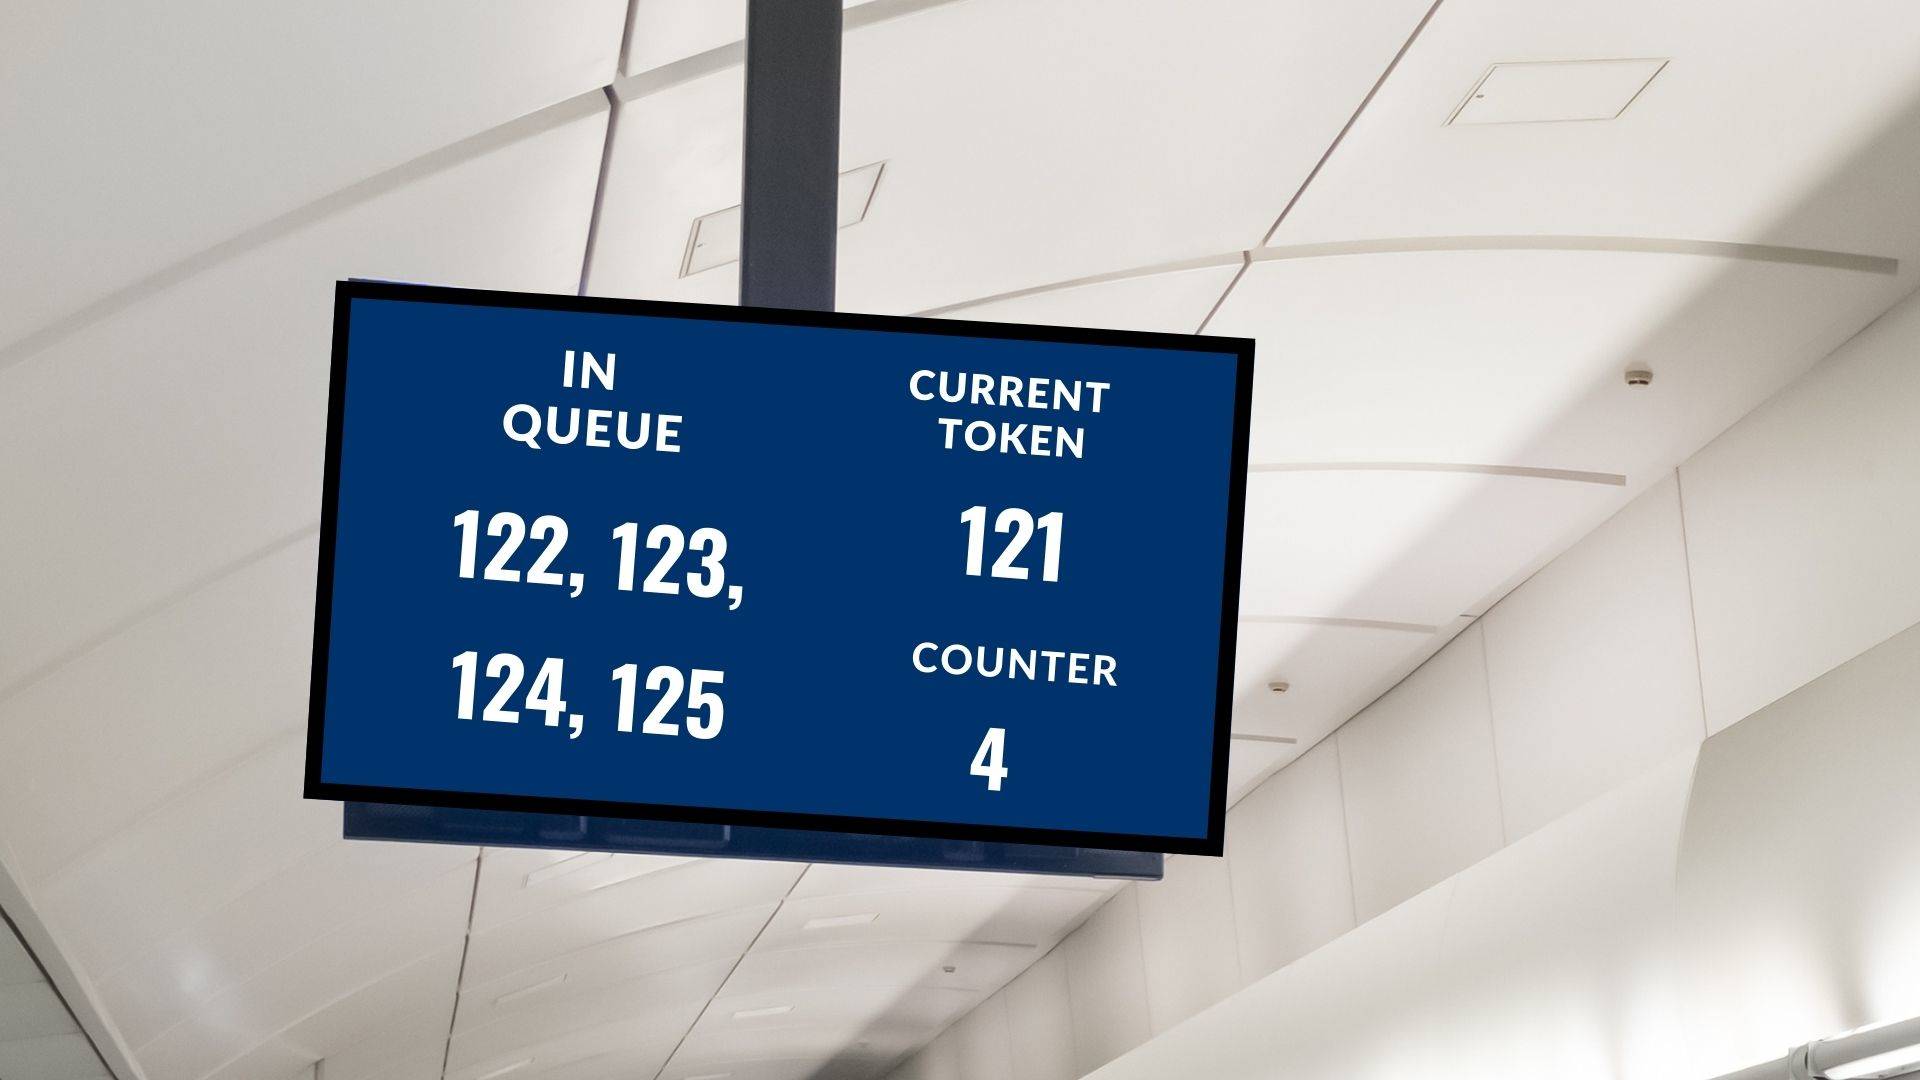 public sector digital signage screen displaying queue information